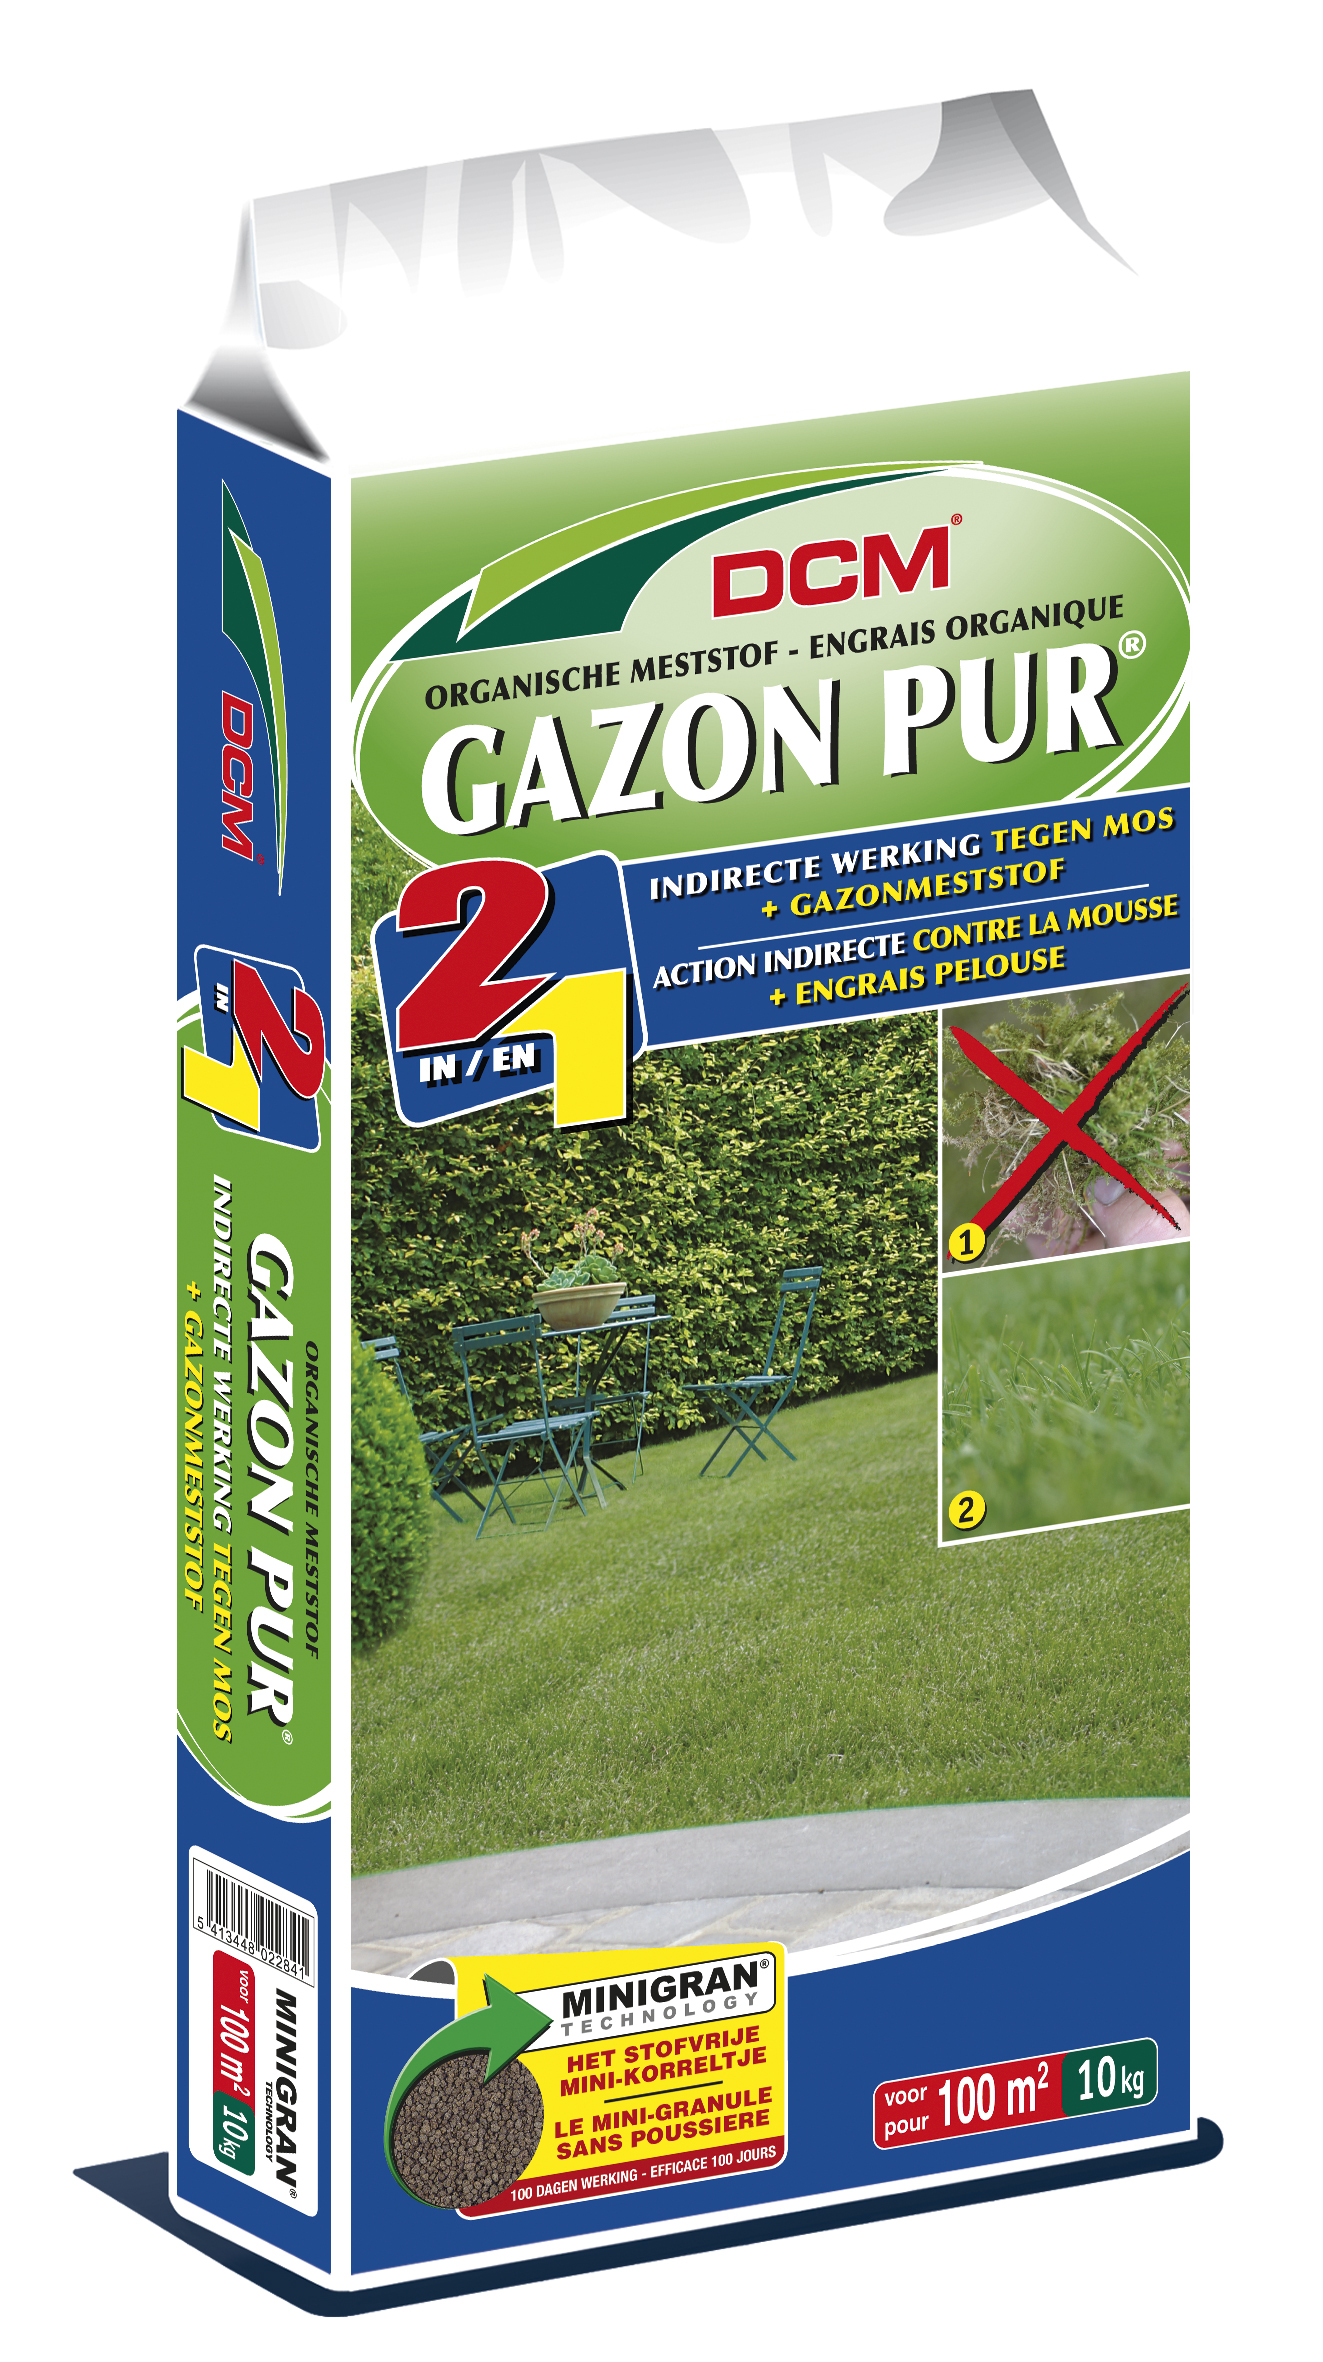 DCM gazon-pur bemesting met anti-moswerking 10kg